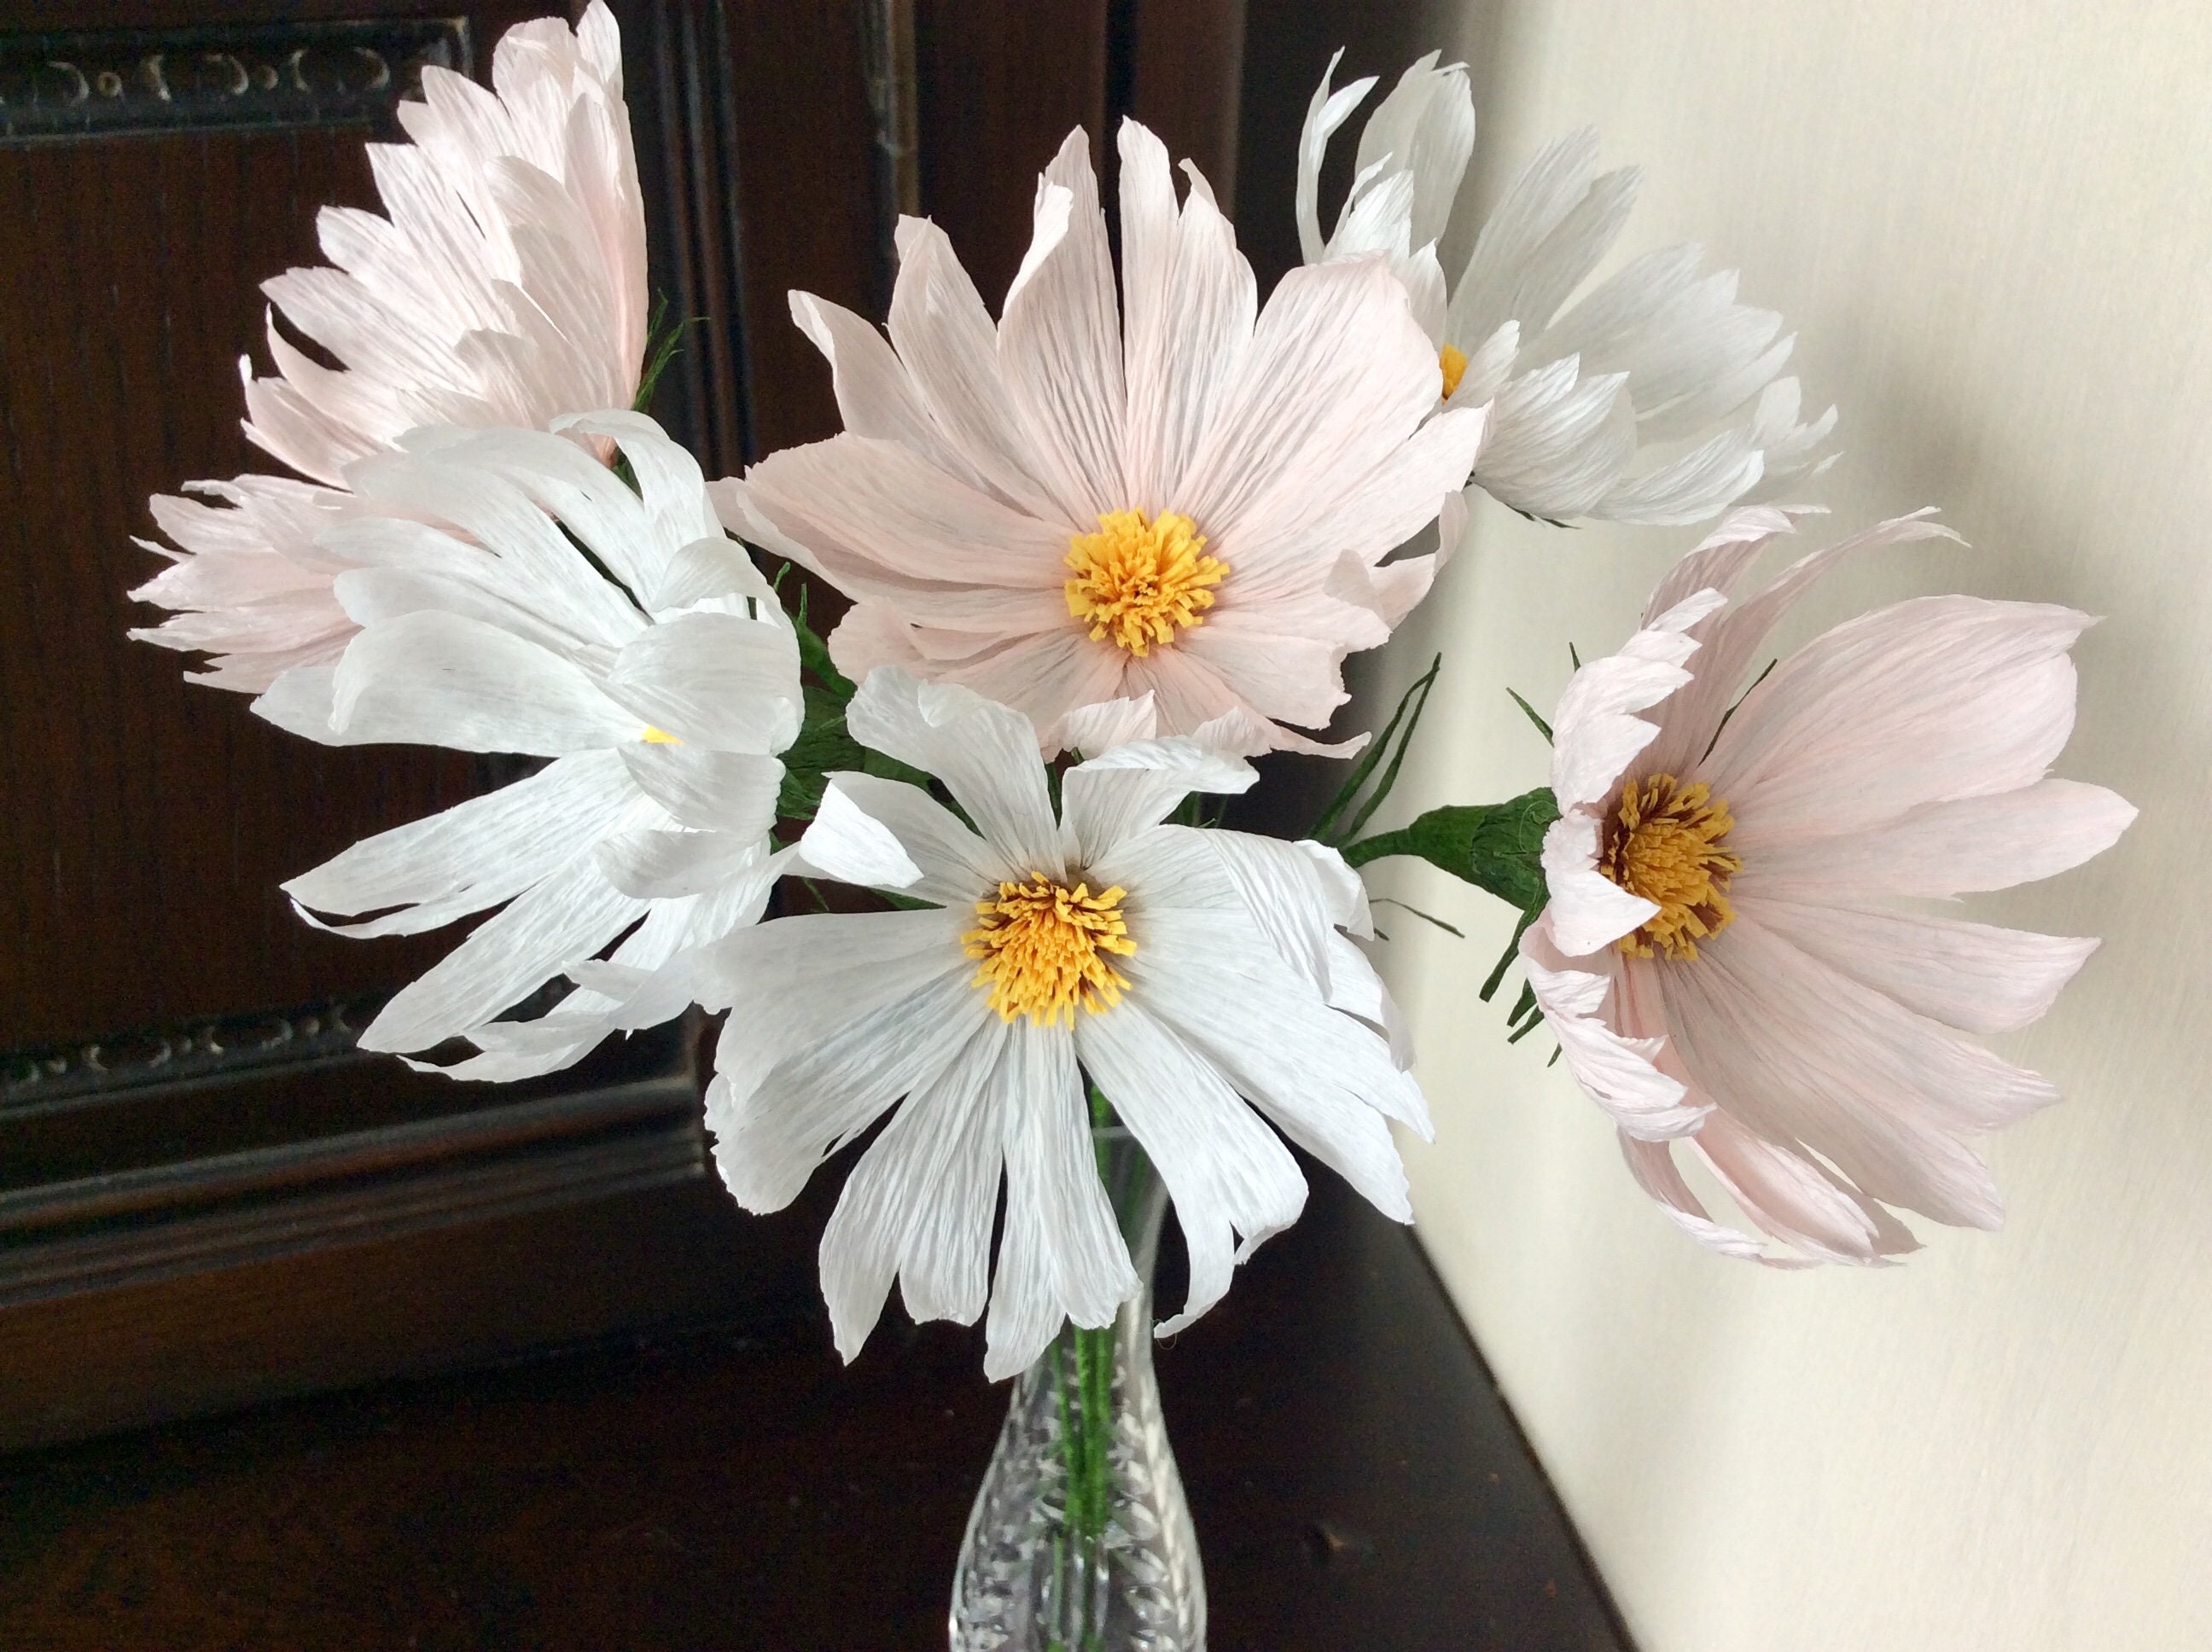 Handmade Crepe Paper Cupcake Cosmos Flowers in Pale Pink | Etsy